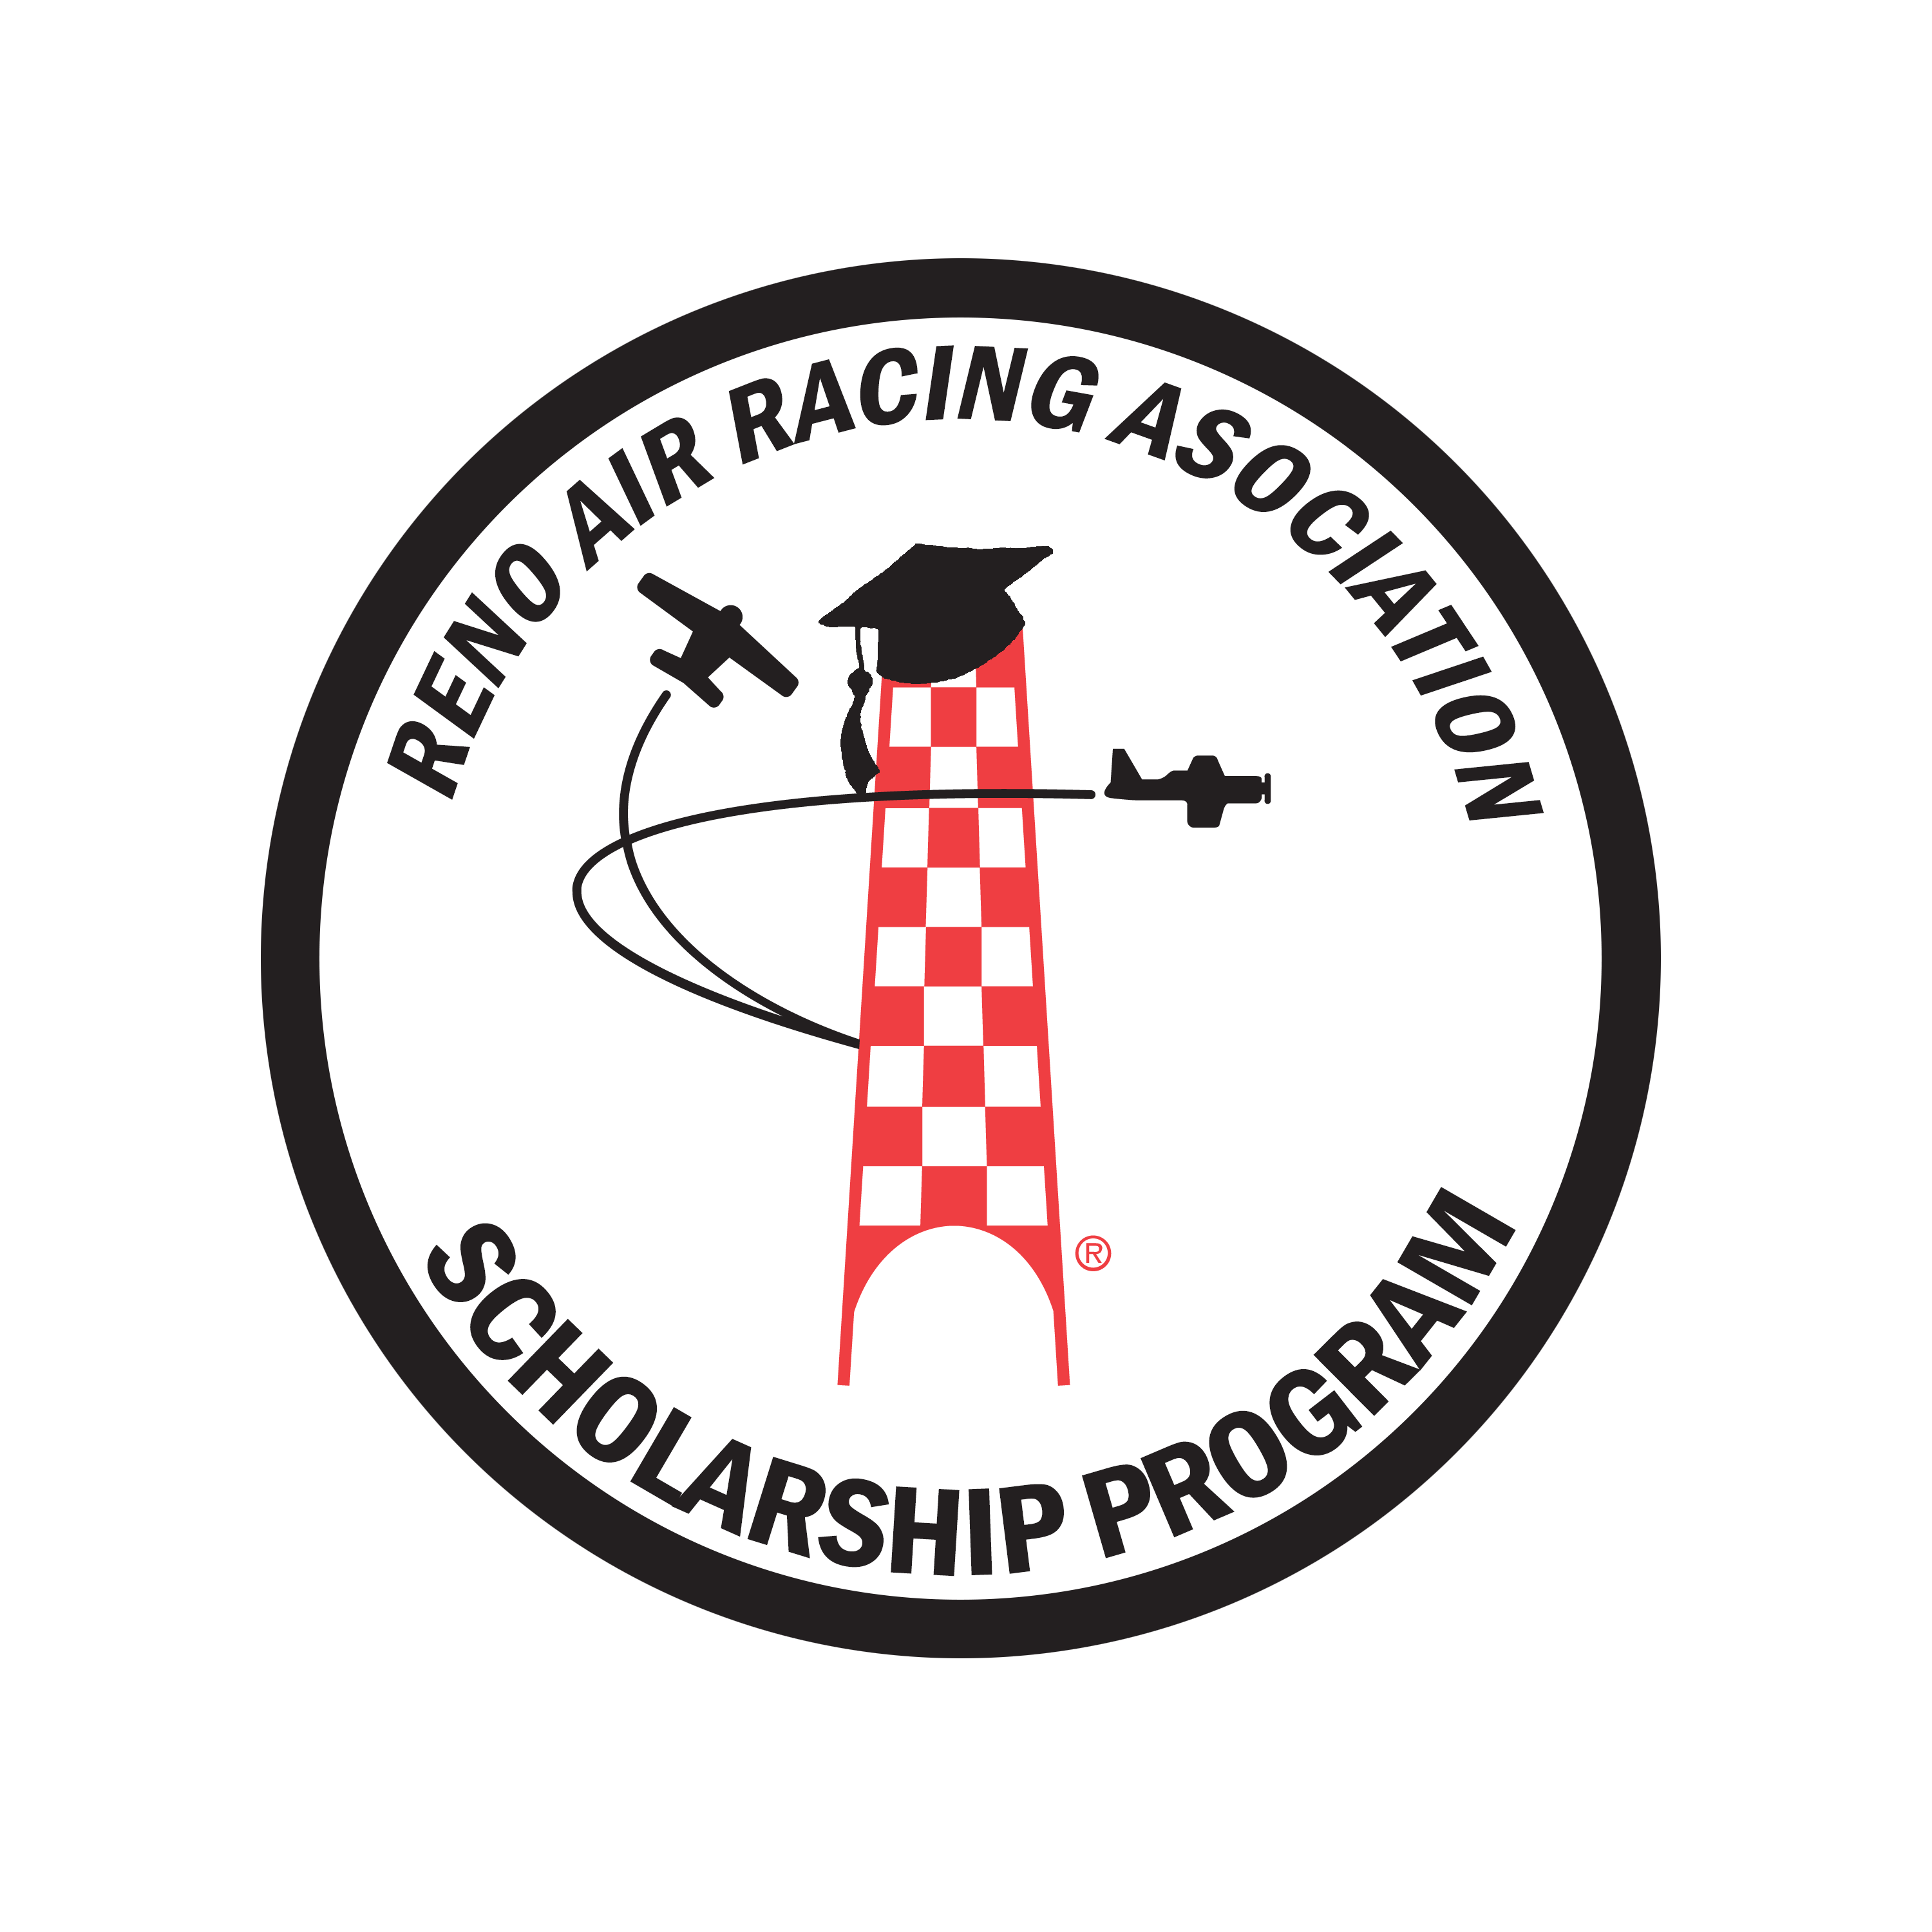 Reno Air Racing Association Announces Scholarship Program